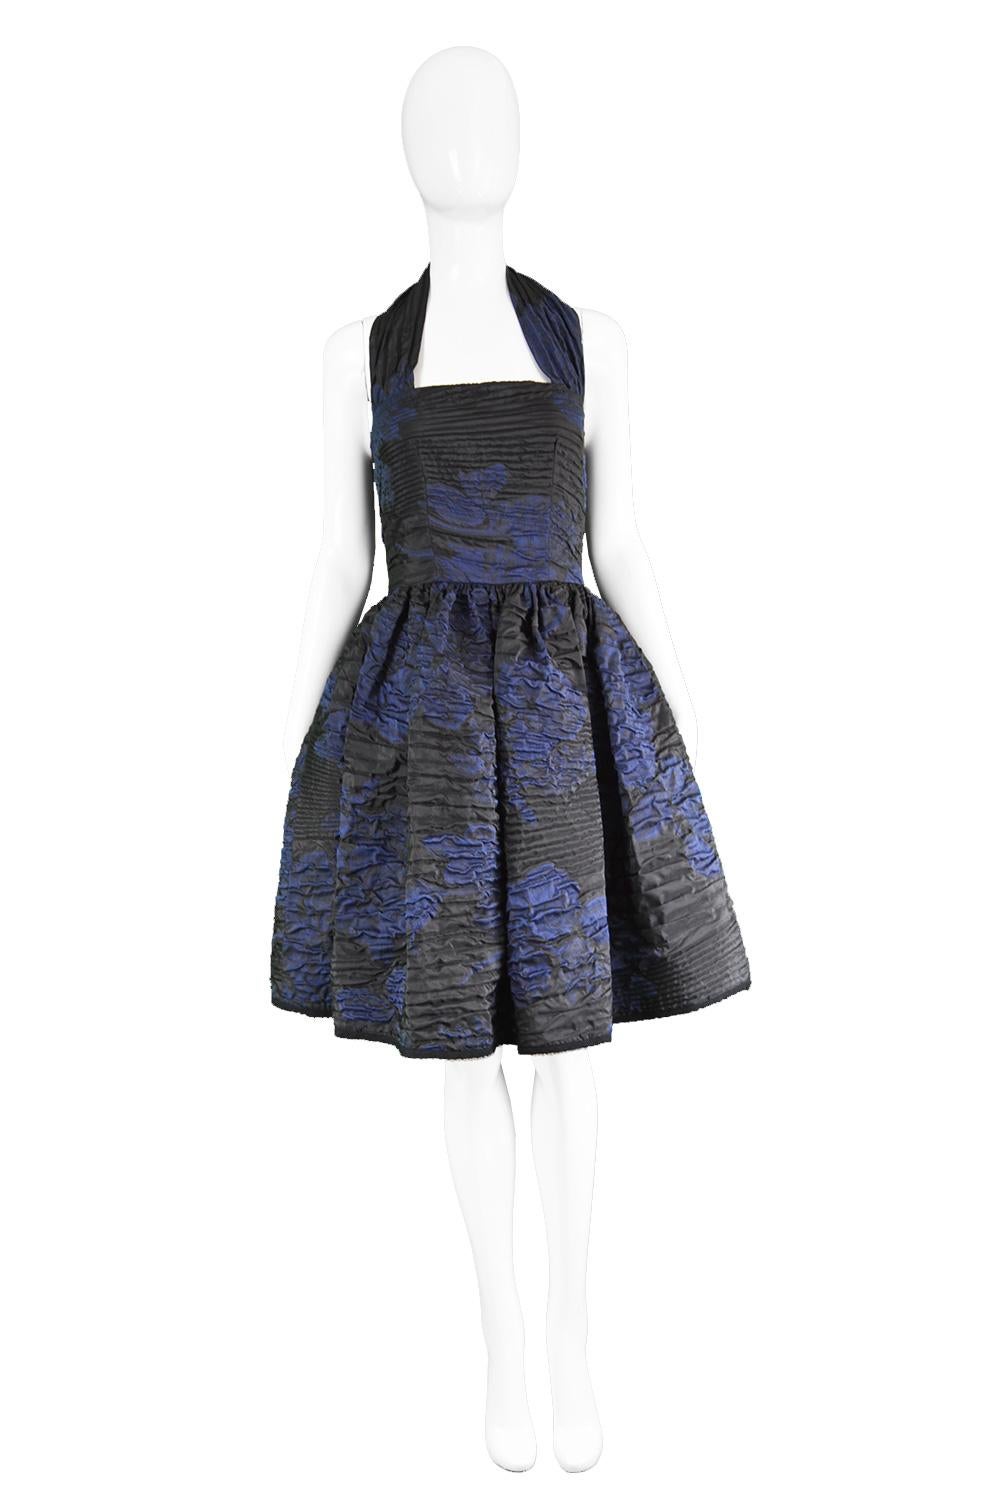 Oscar de la Renta Blue & Black Textured Silk Blend Halter neck Evening Party Dress

Size: Marked US 4 which is roughly a UK 8/ EU 36. Please check measurements.
Bust - 33” / 84cm
Waist - 26” / 66cm
Hips - Free
Length (Bust to Hem) - 31” /